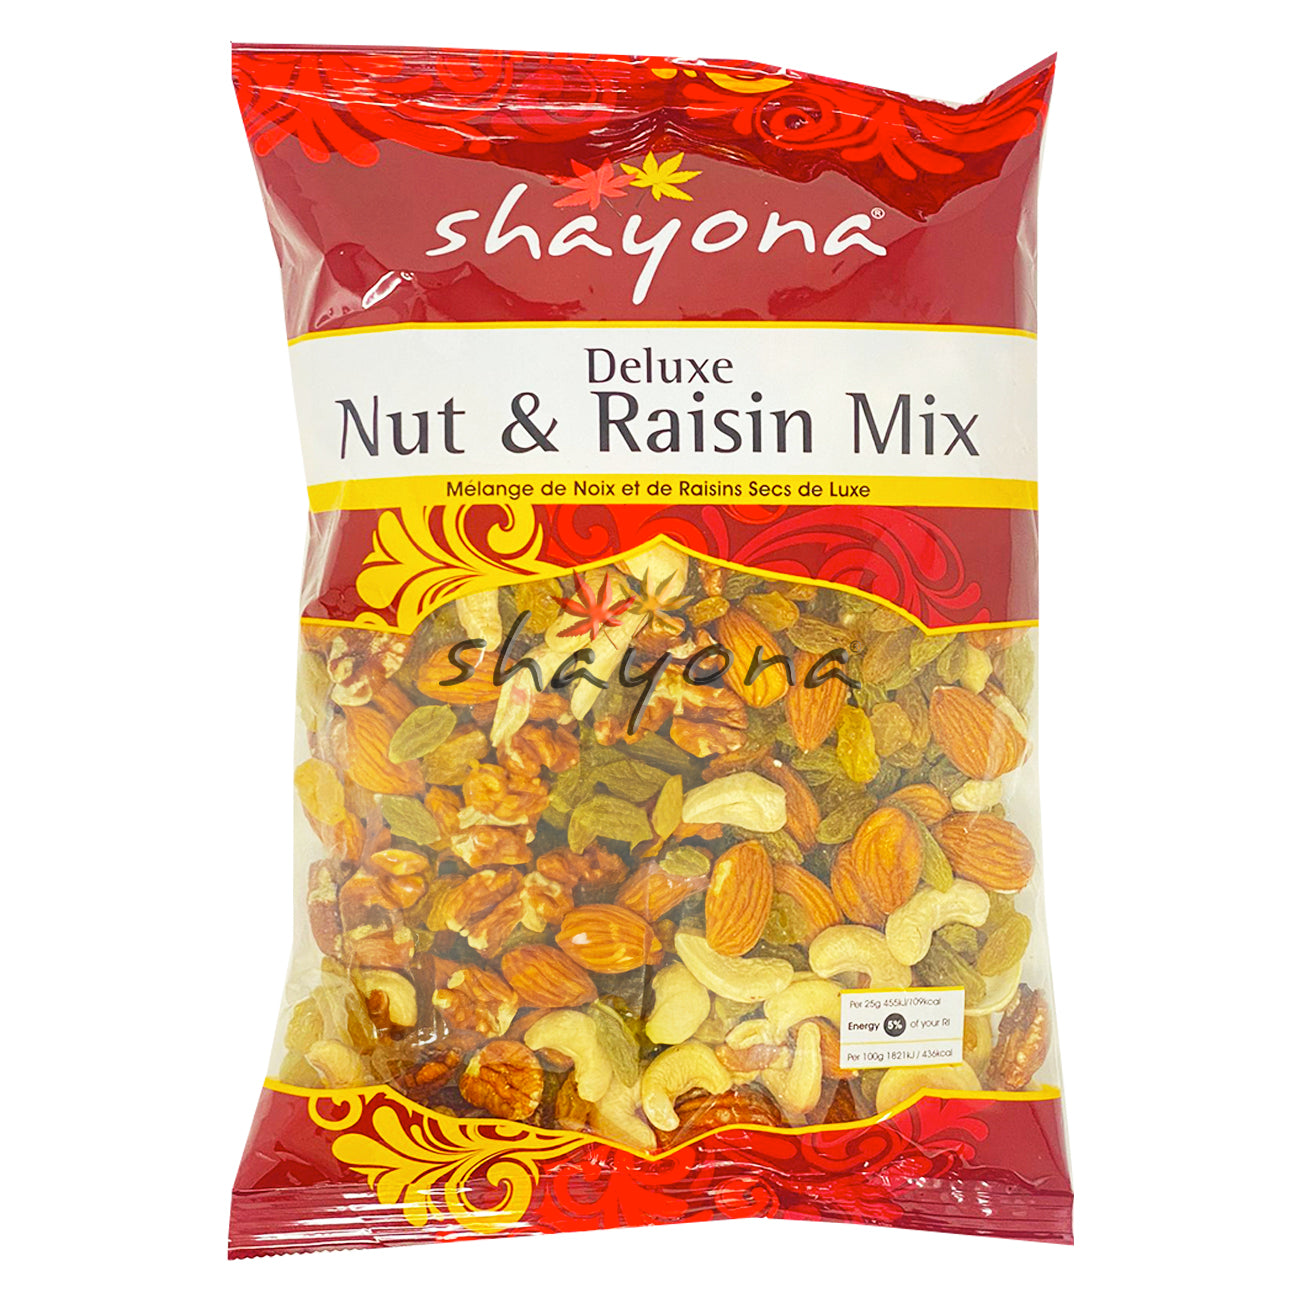 Shayona Deluxe Nut & Raisin Mix